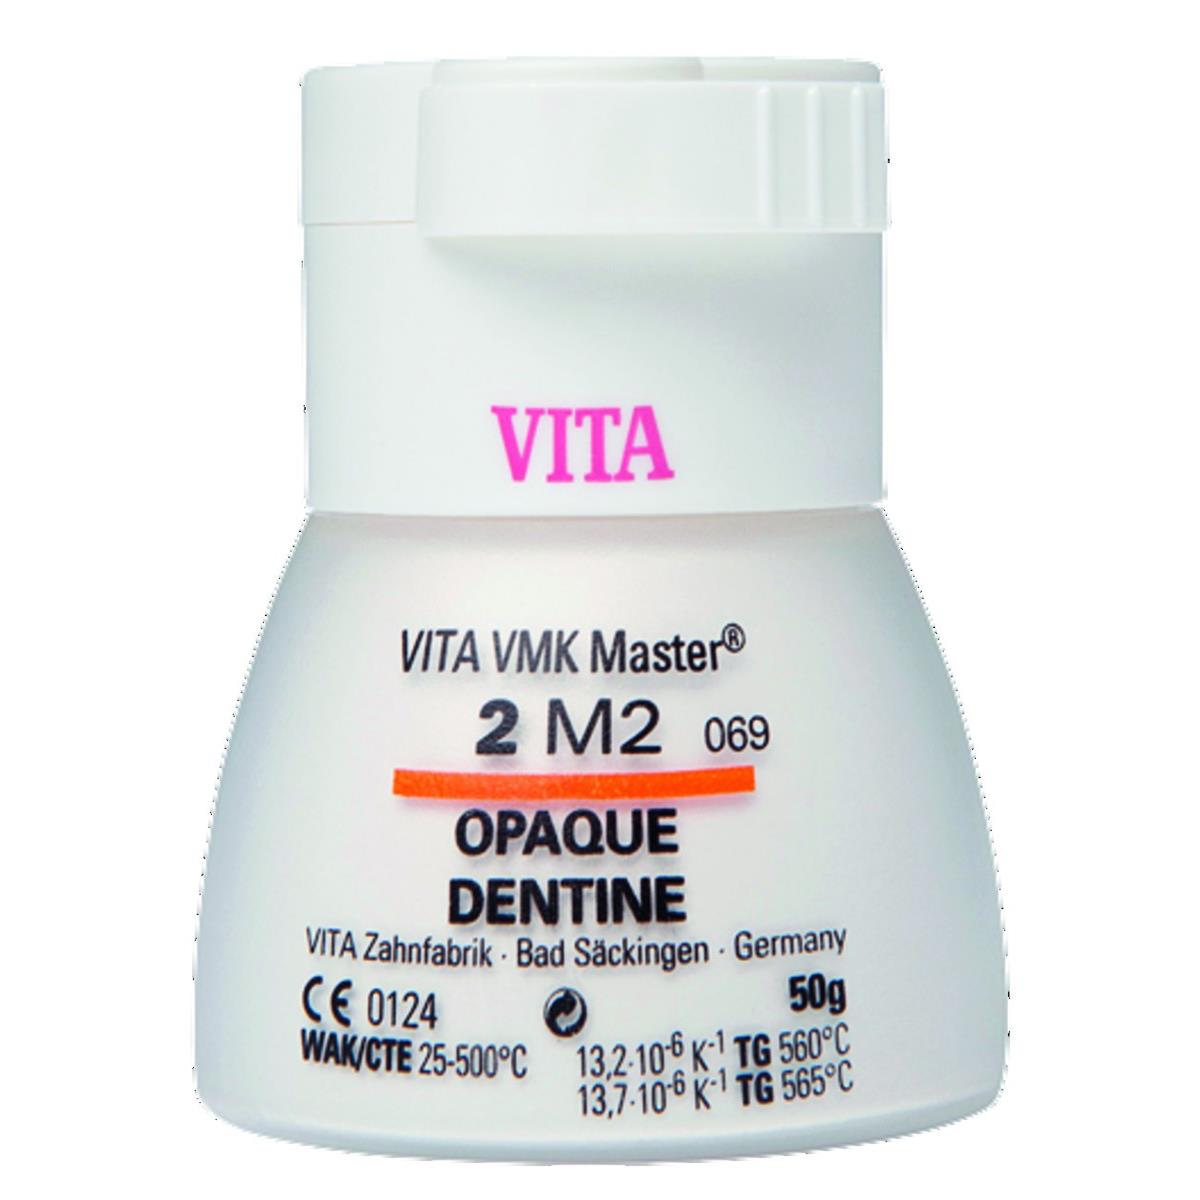 VMK Master VITA - Dentine Opaque - 3M1 - Le flacon de 50 g